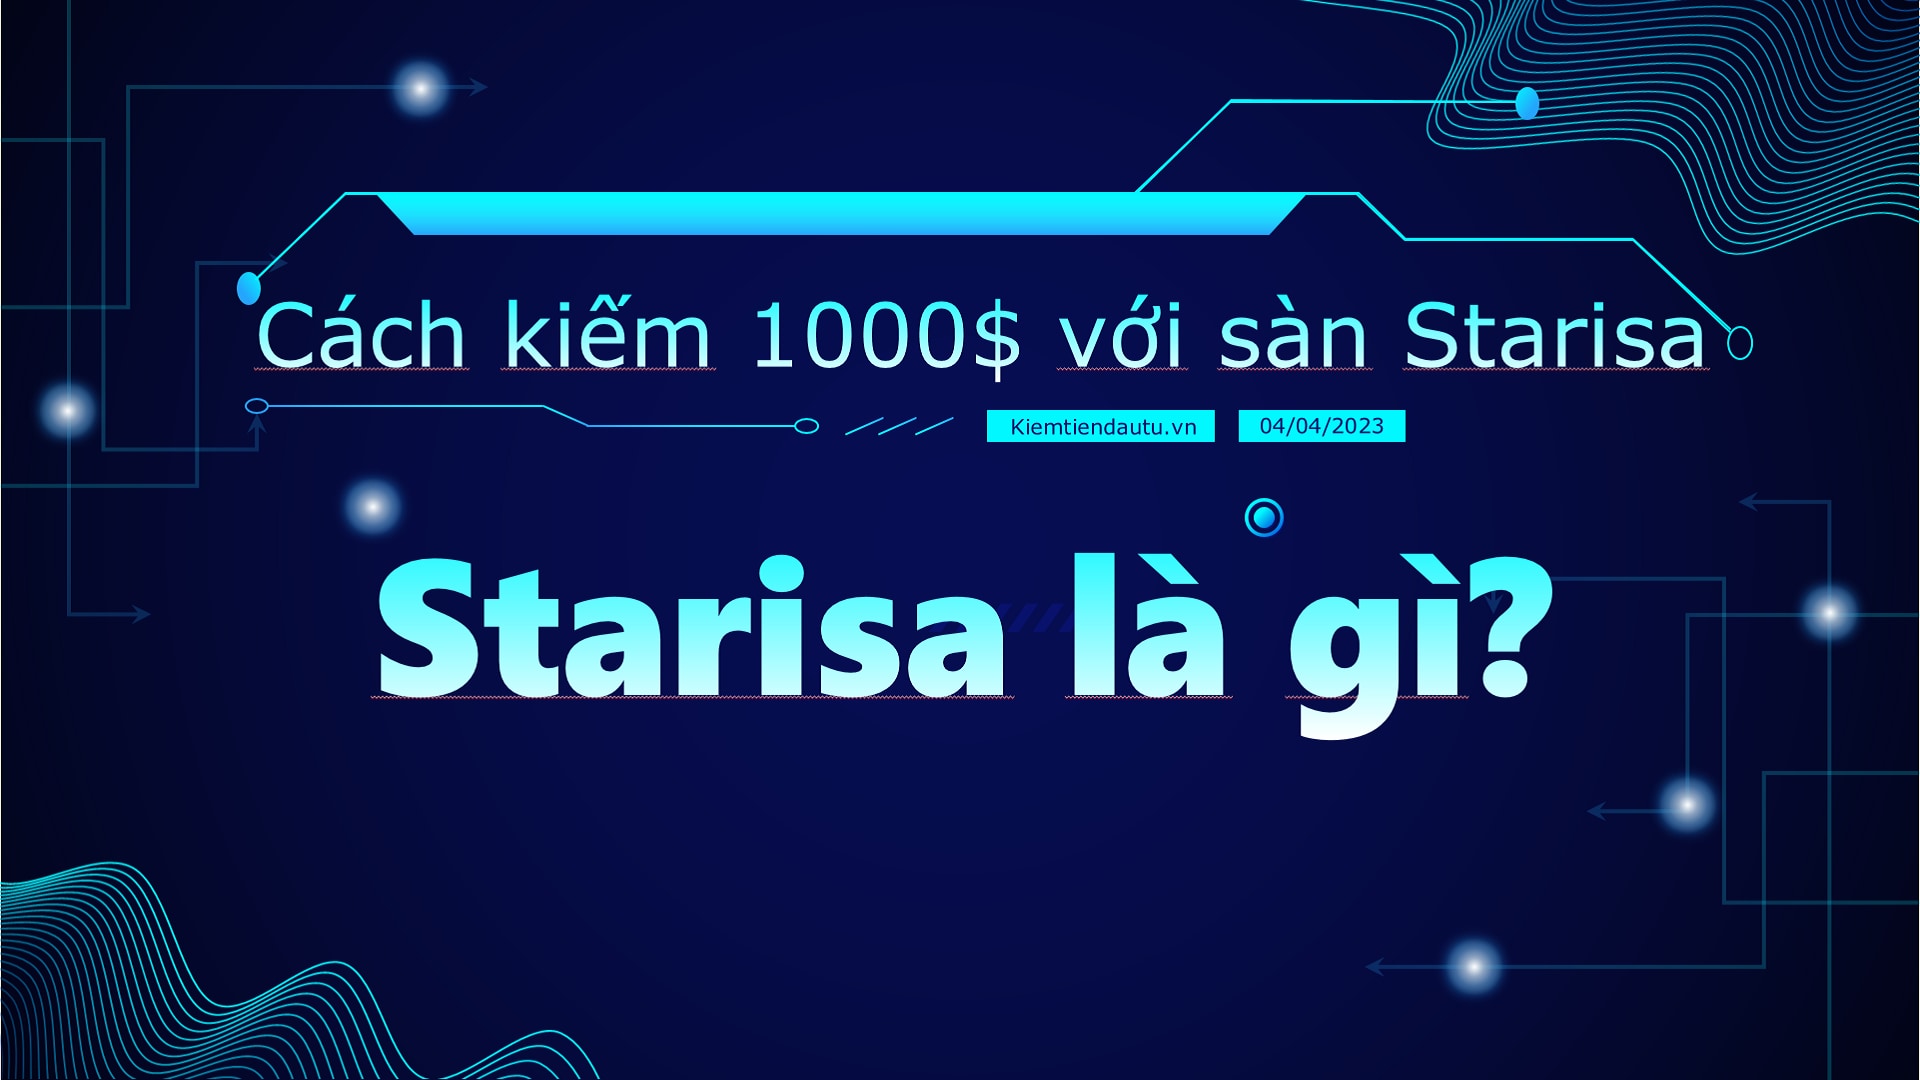 Starisa là gì? Cách kiếm 1000$ với sàn Starisa.net | Kiemtiendautu.vn